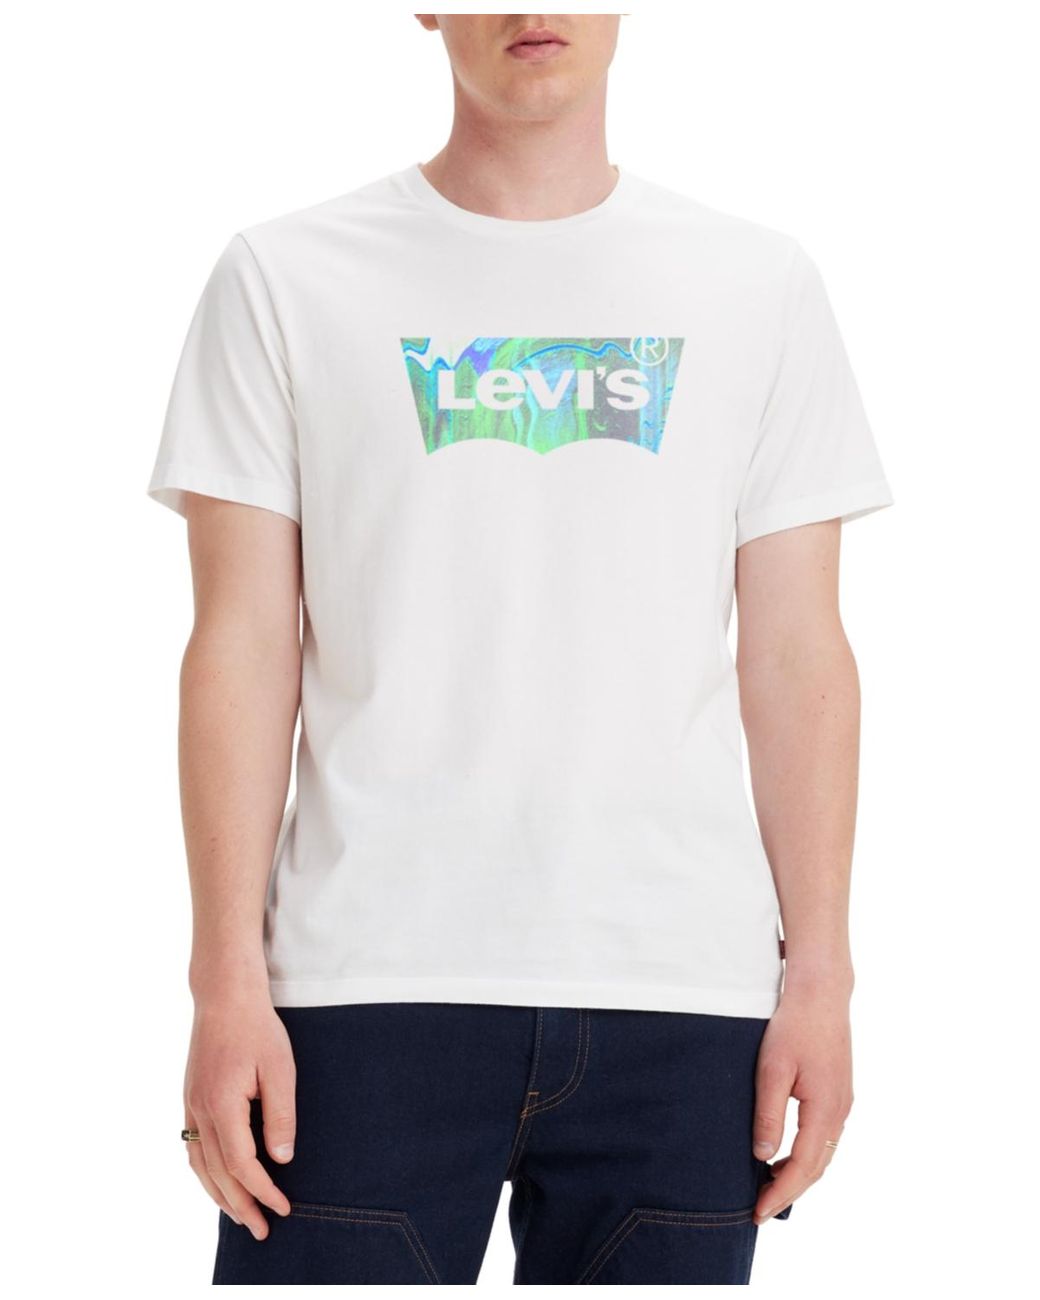 Levi's® Men's Classic Fit Short Sleeve Batwing Logo Crewneck T-Shirt -  Light Gray S